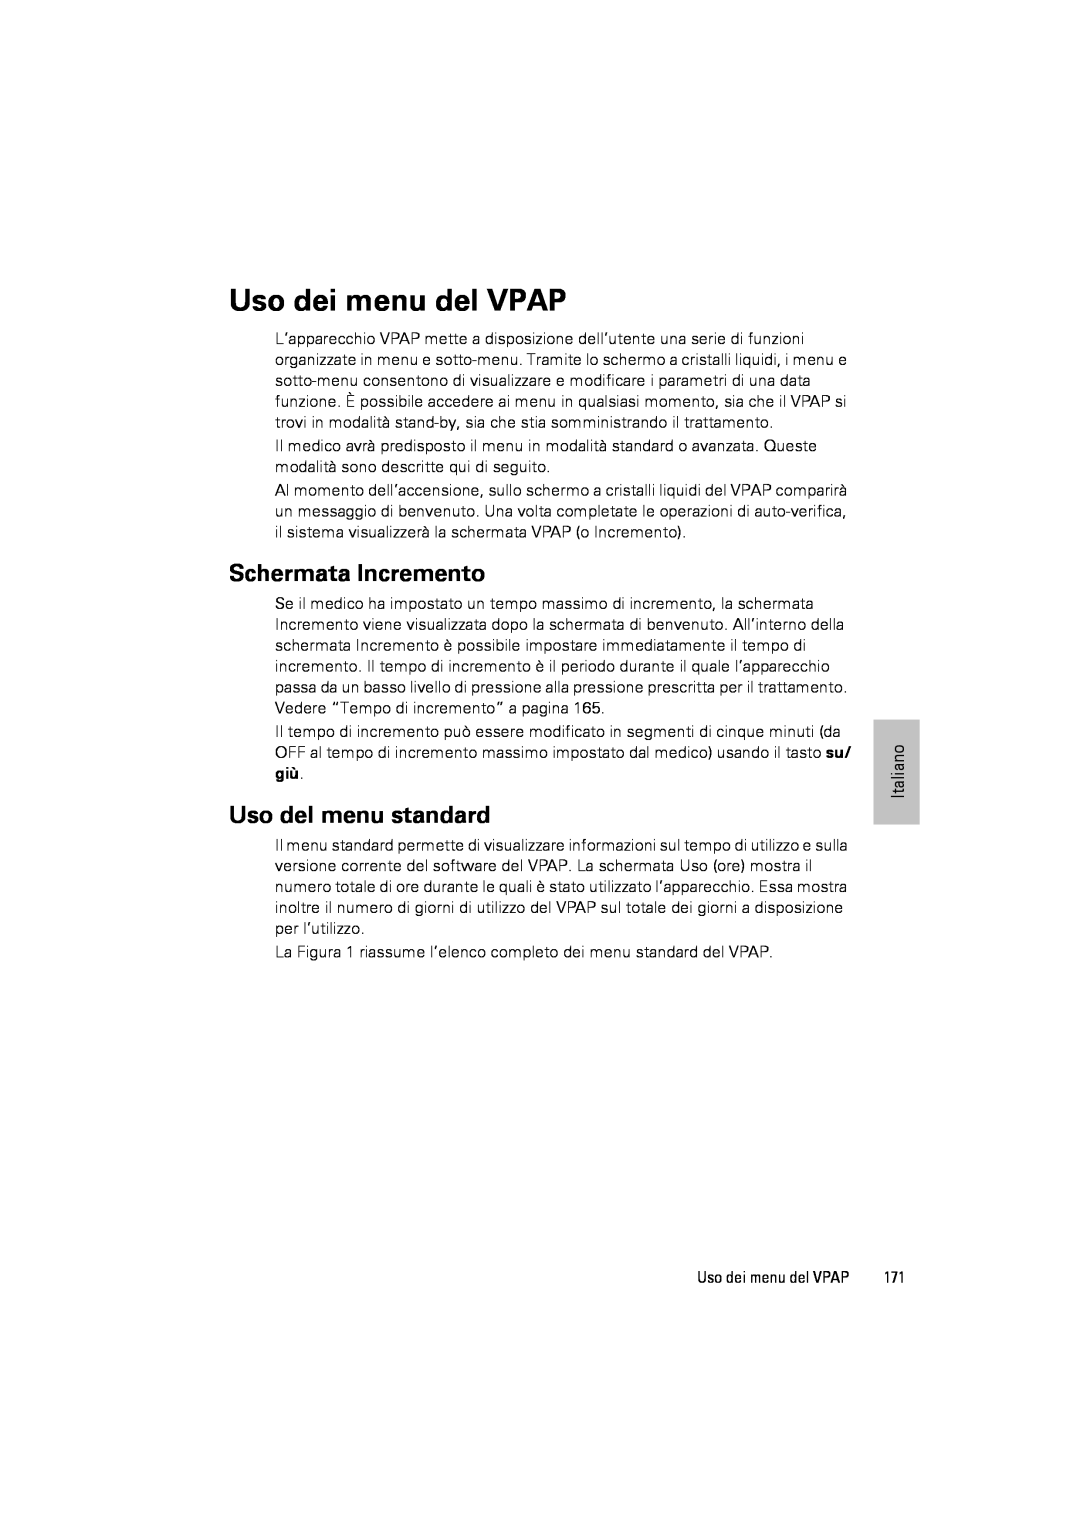 ResMed III & III ST user manual Uso dei menu del VPAP, Schermata Incremento, Uso del menu standard 